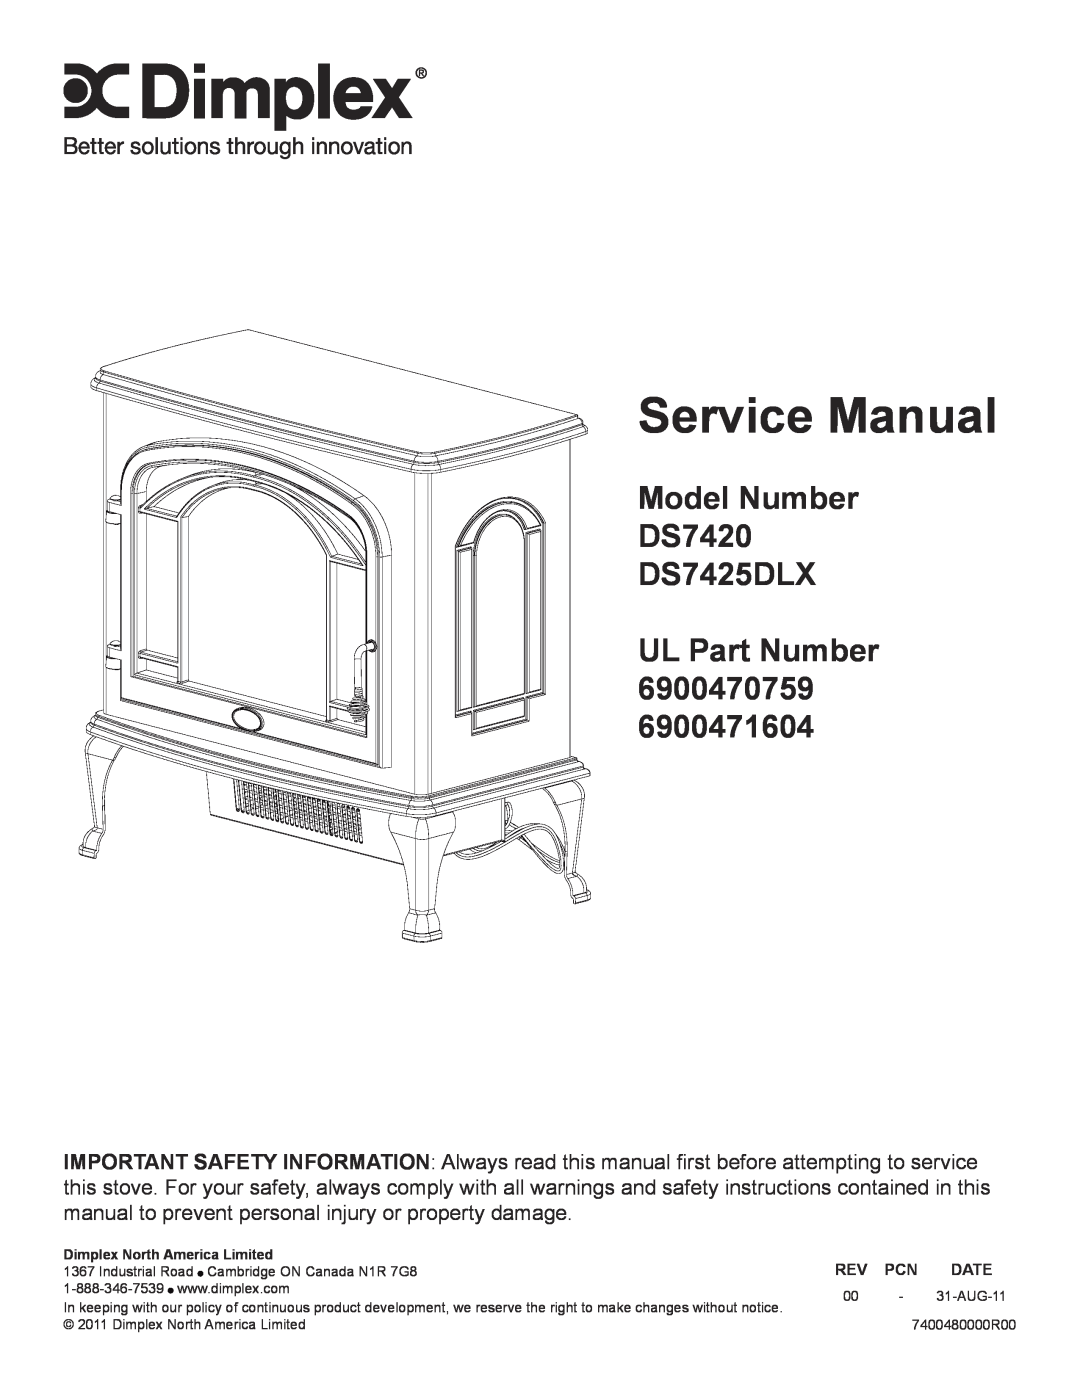 Dimplex service manual Model Number DS7420 DS7425DLX, UL Part Number 